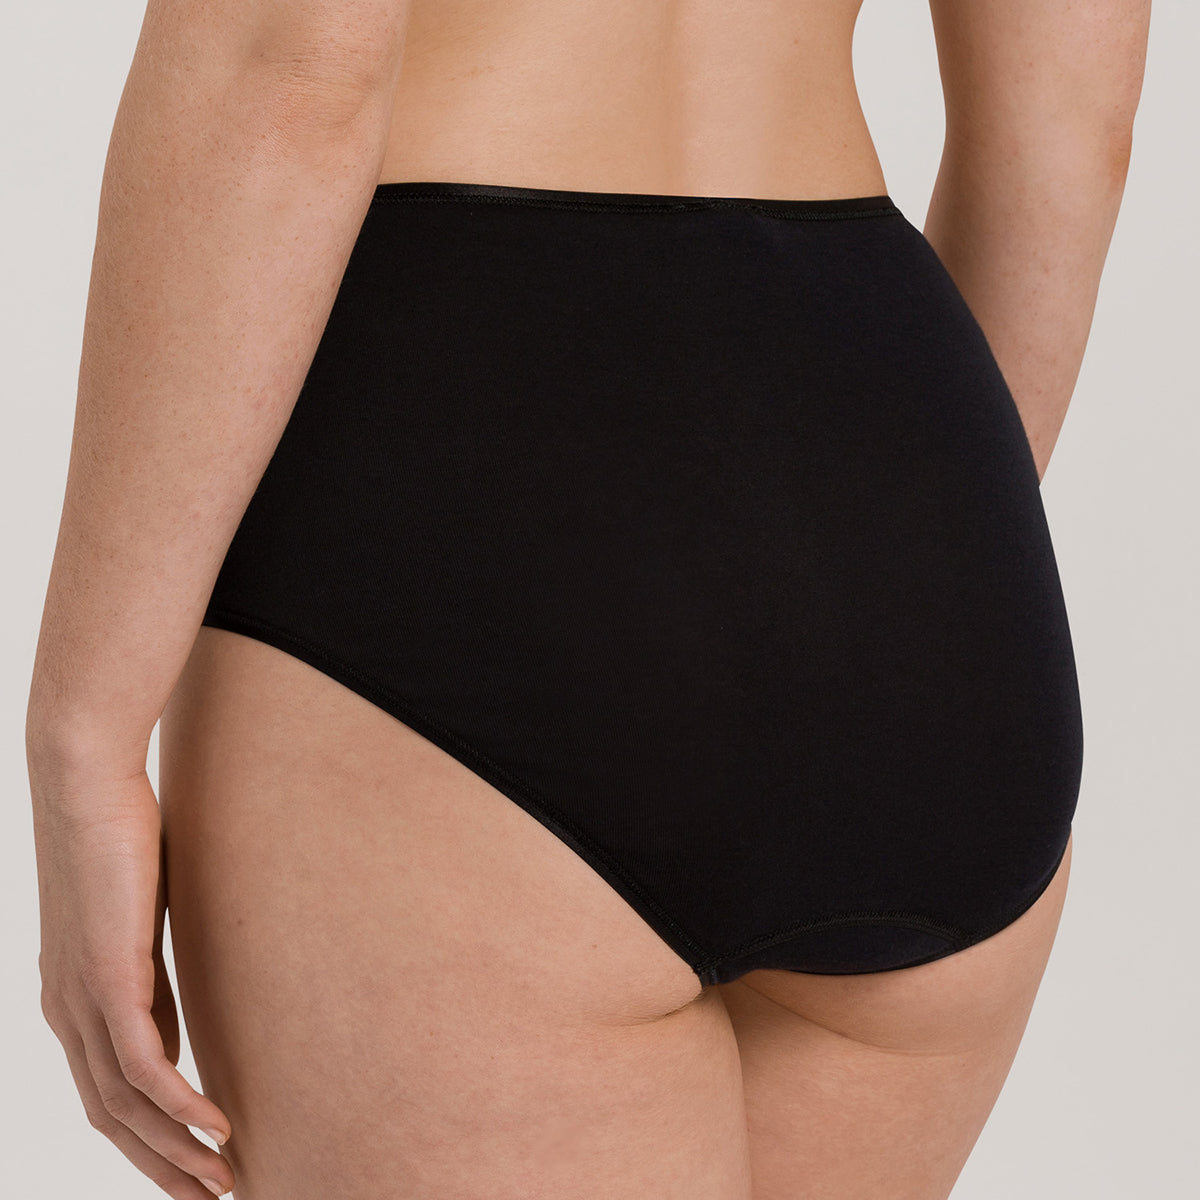 Buy Hanro Men's Cotton Sporty Bikini Brief,Black,X-Large at